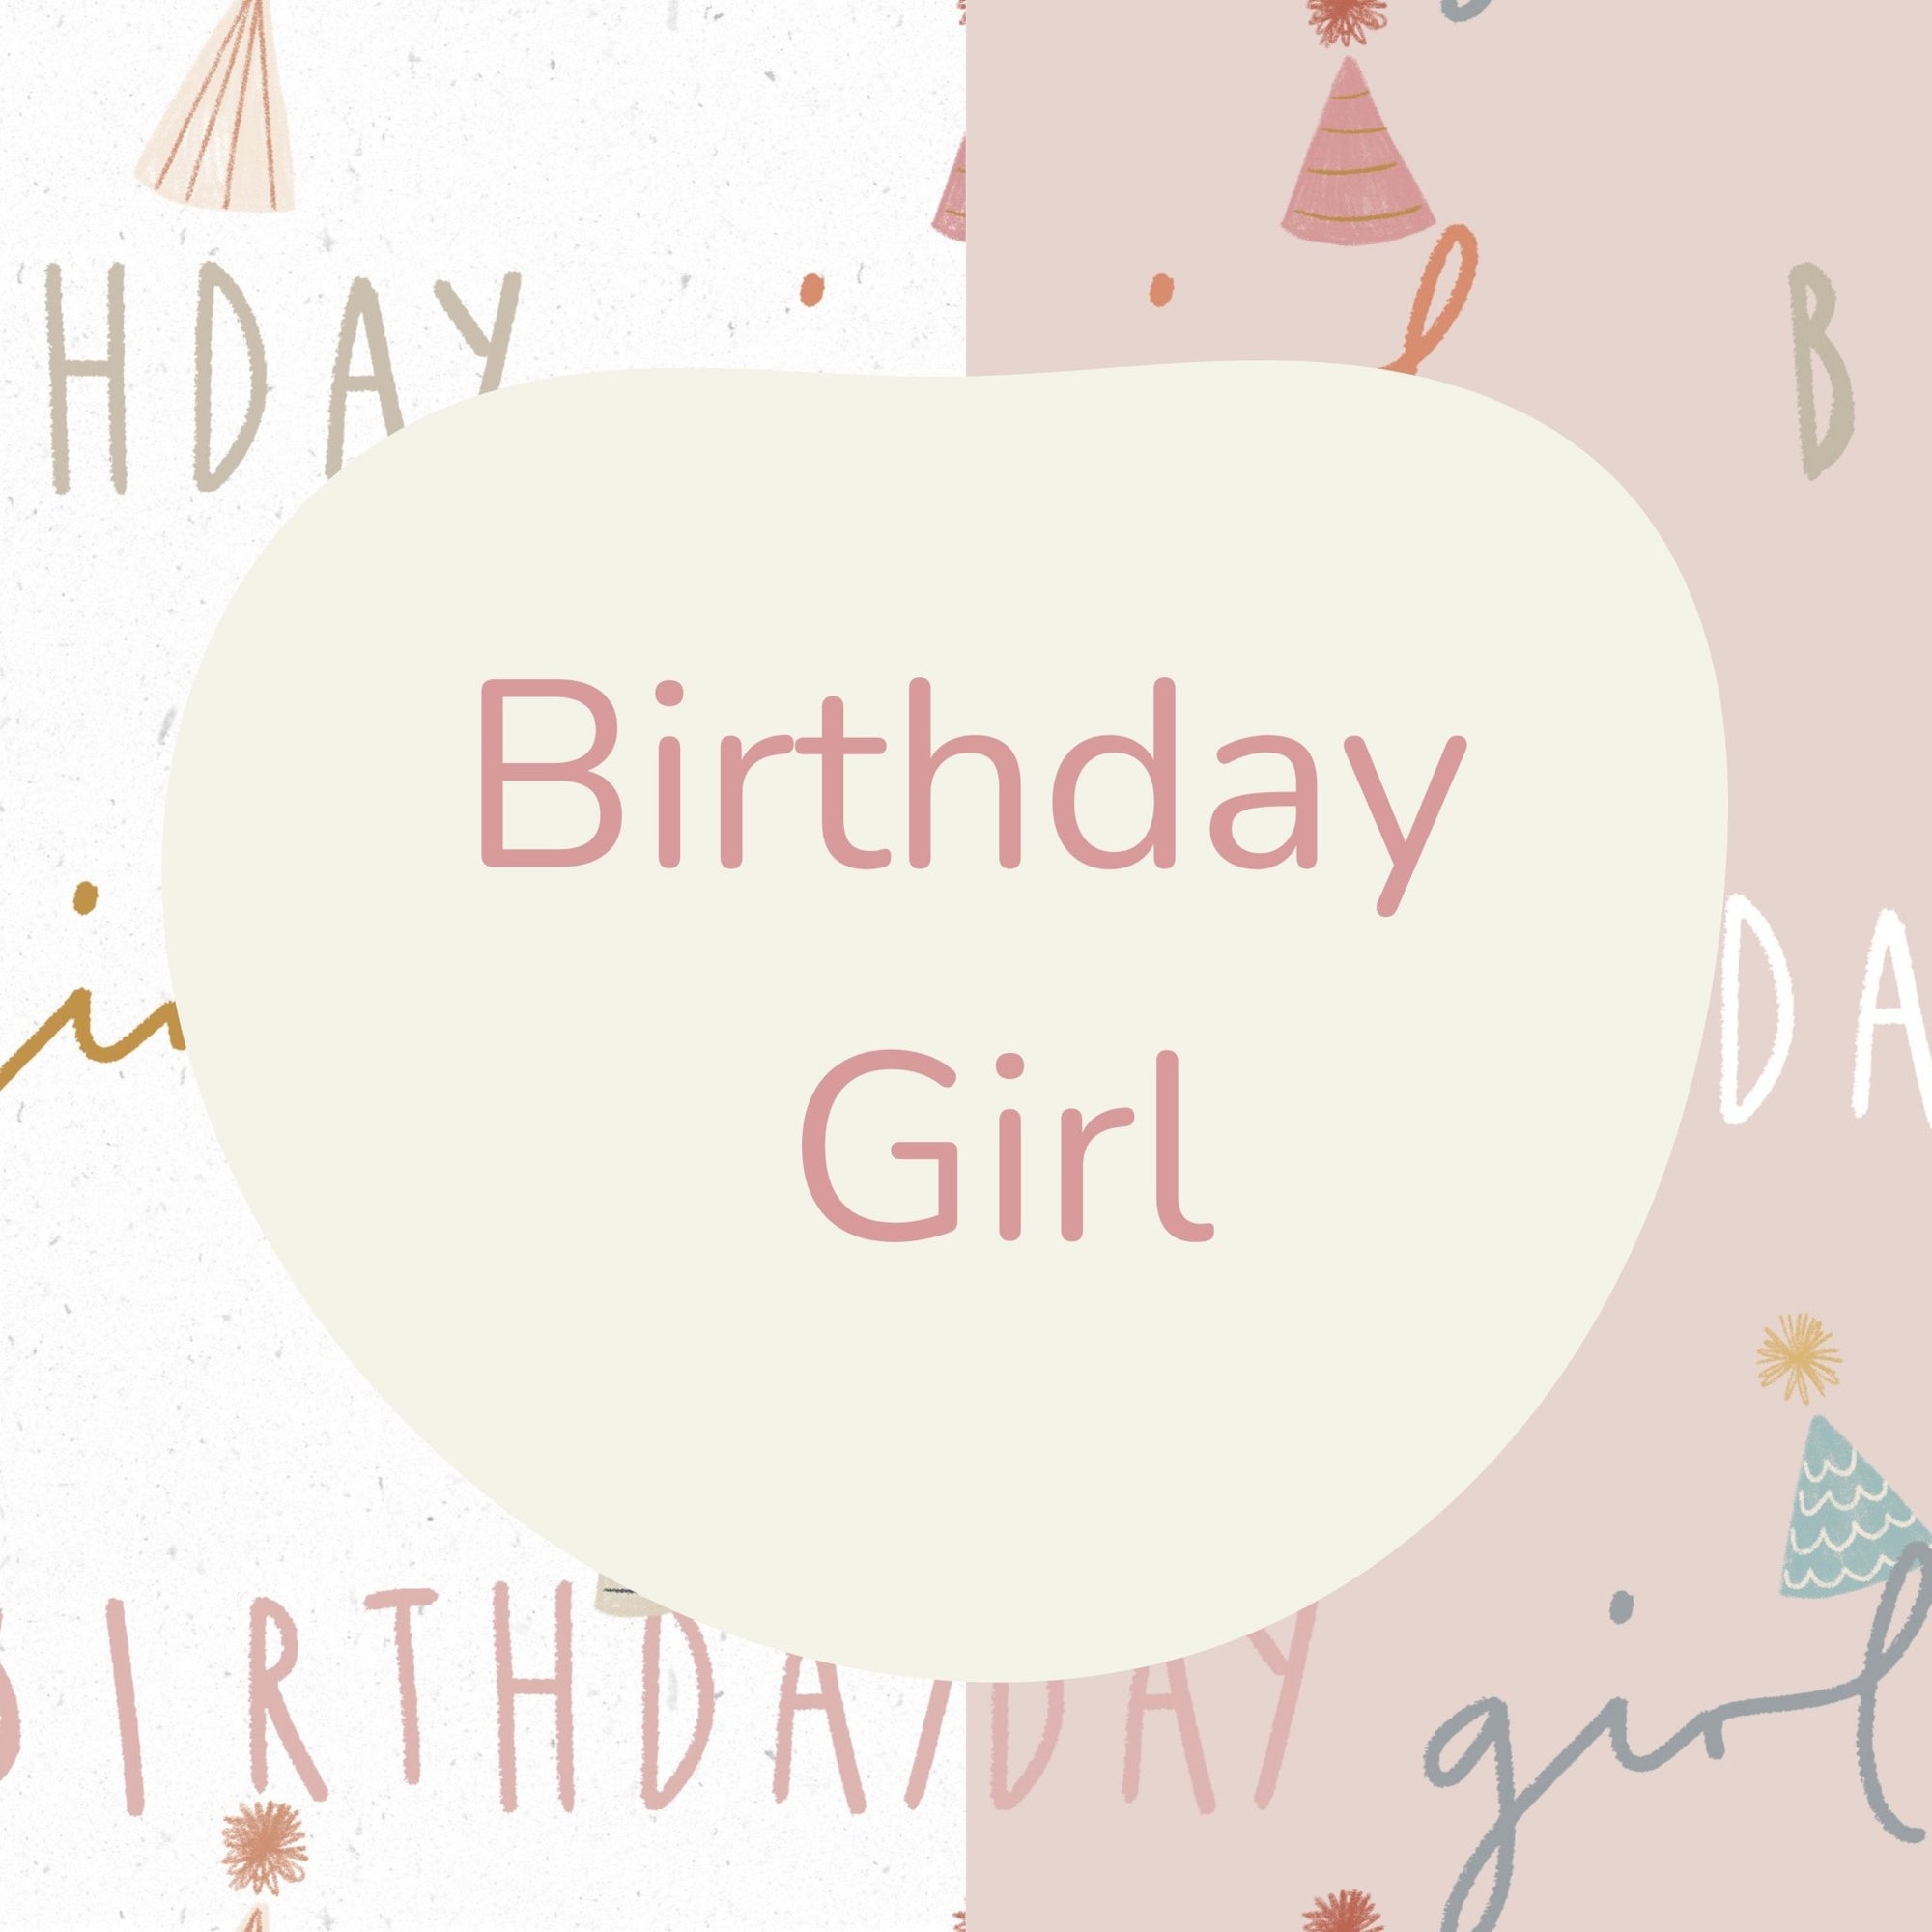 Birthday Girl - ClayBearOfficial